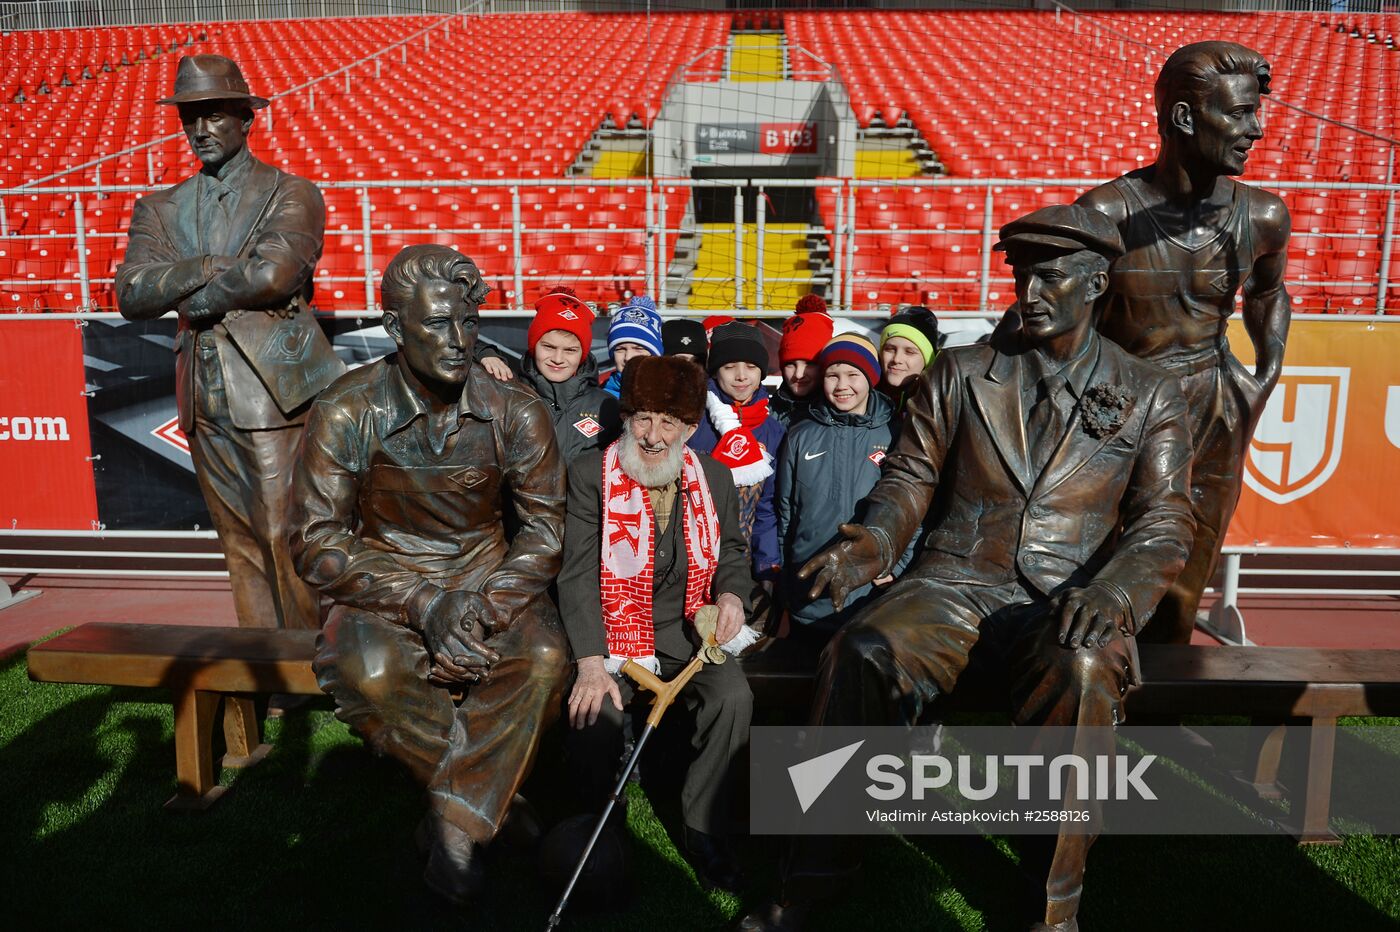 FC Spartak oldest fan visit the club's stadium